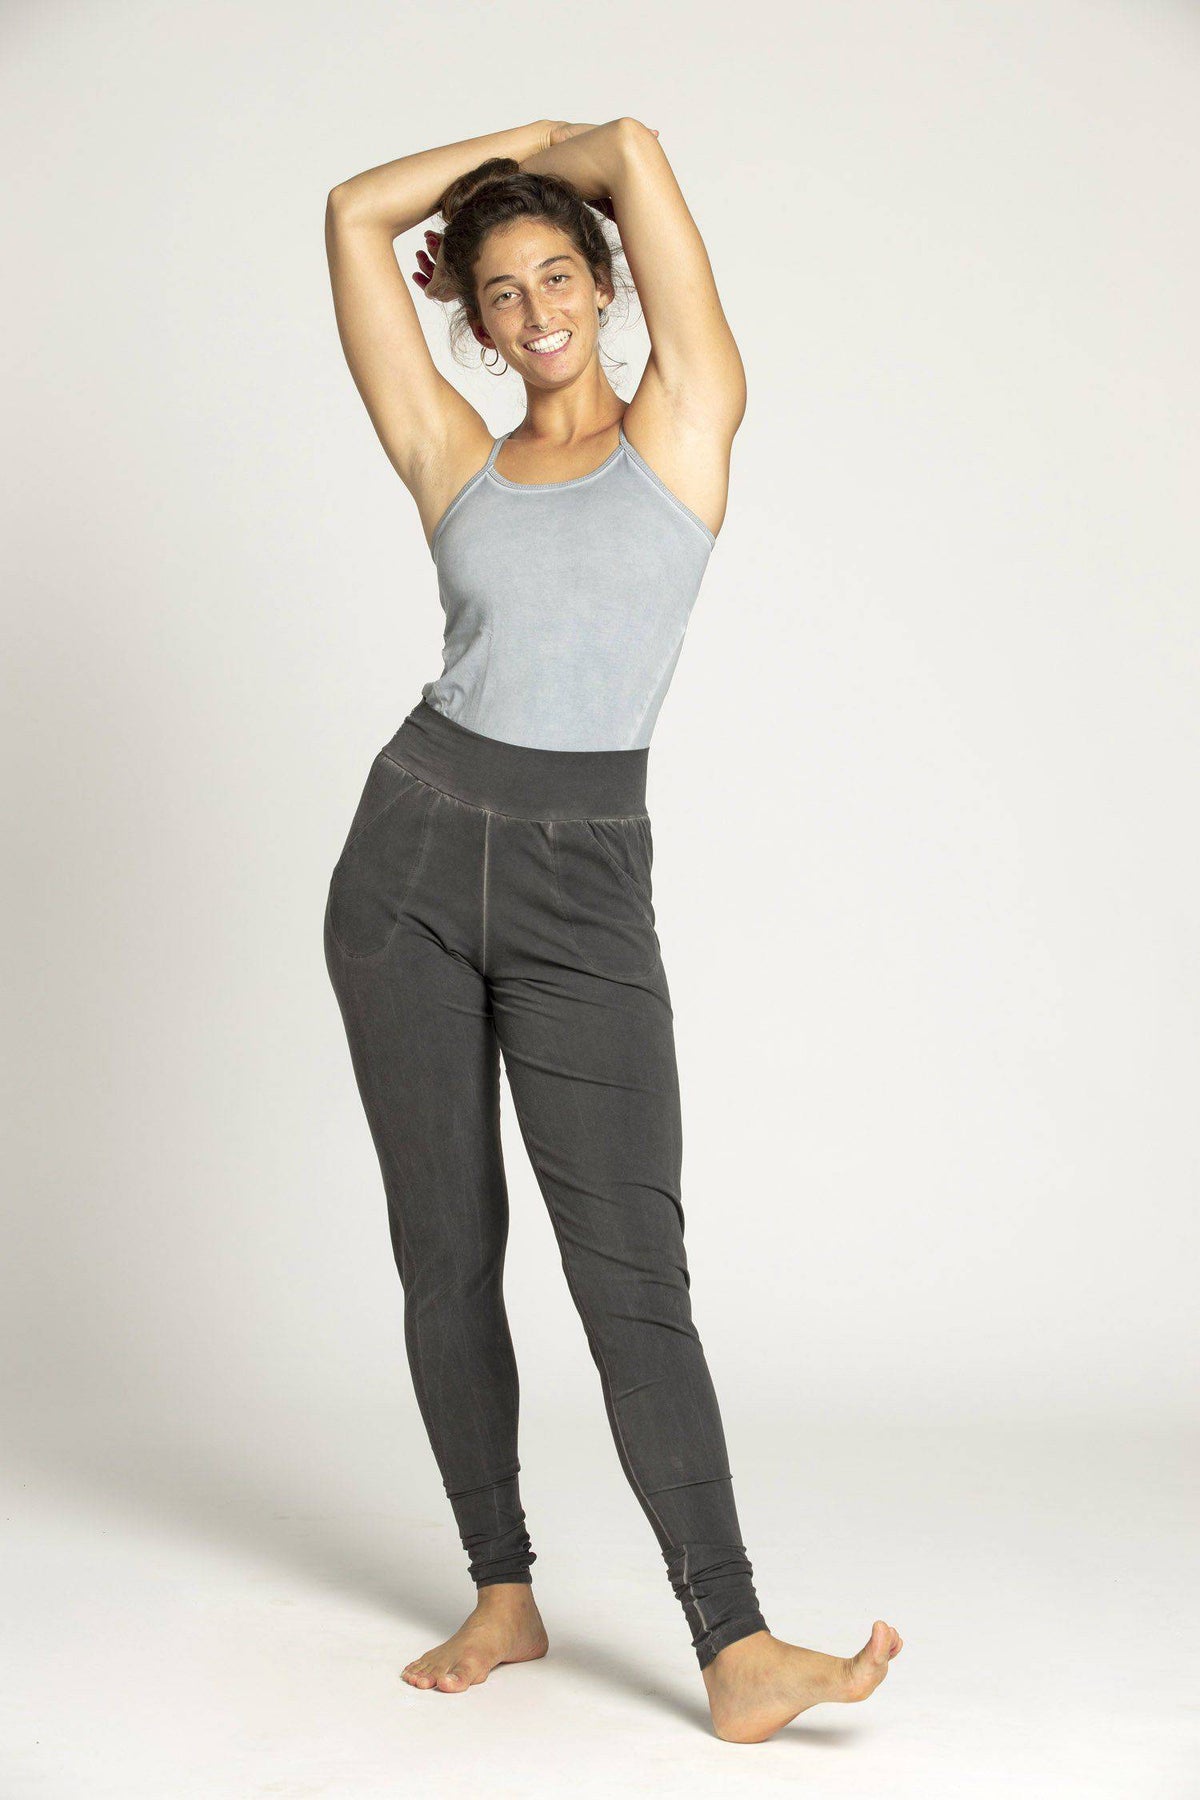 Stone Wash Extra Long Slouchy Pants - womens clothing - Ripple Yoga Wear